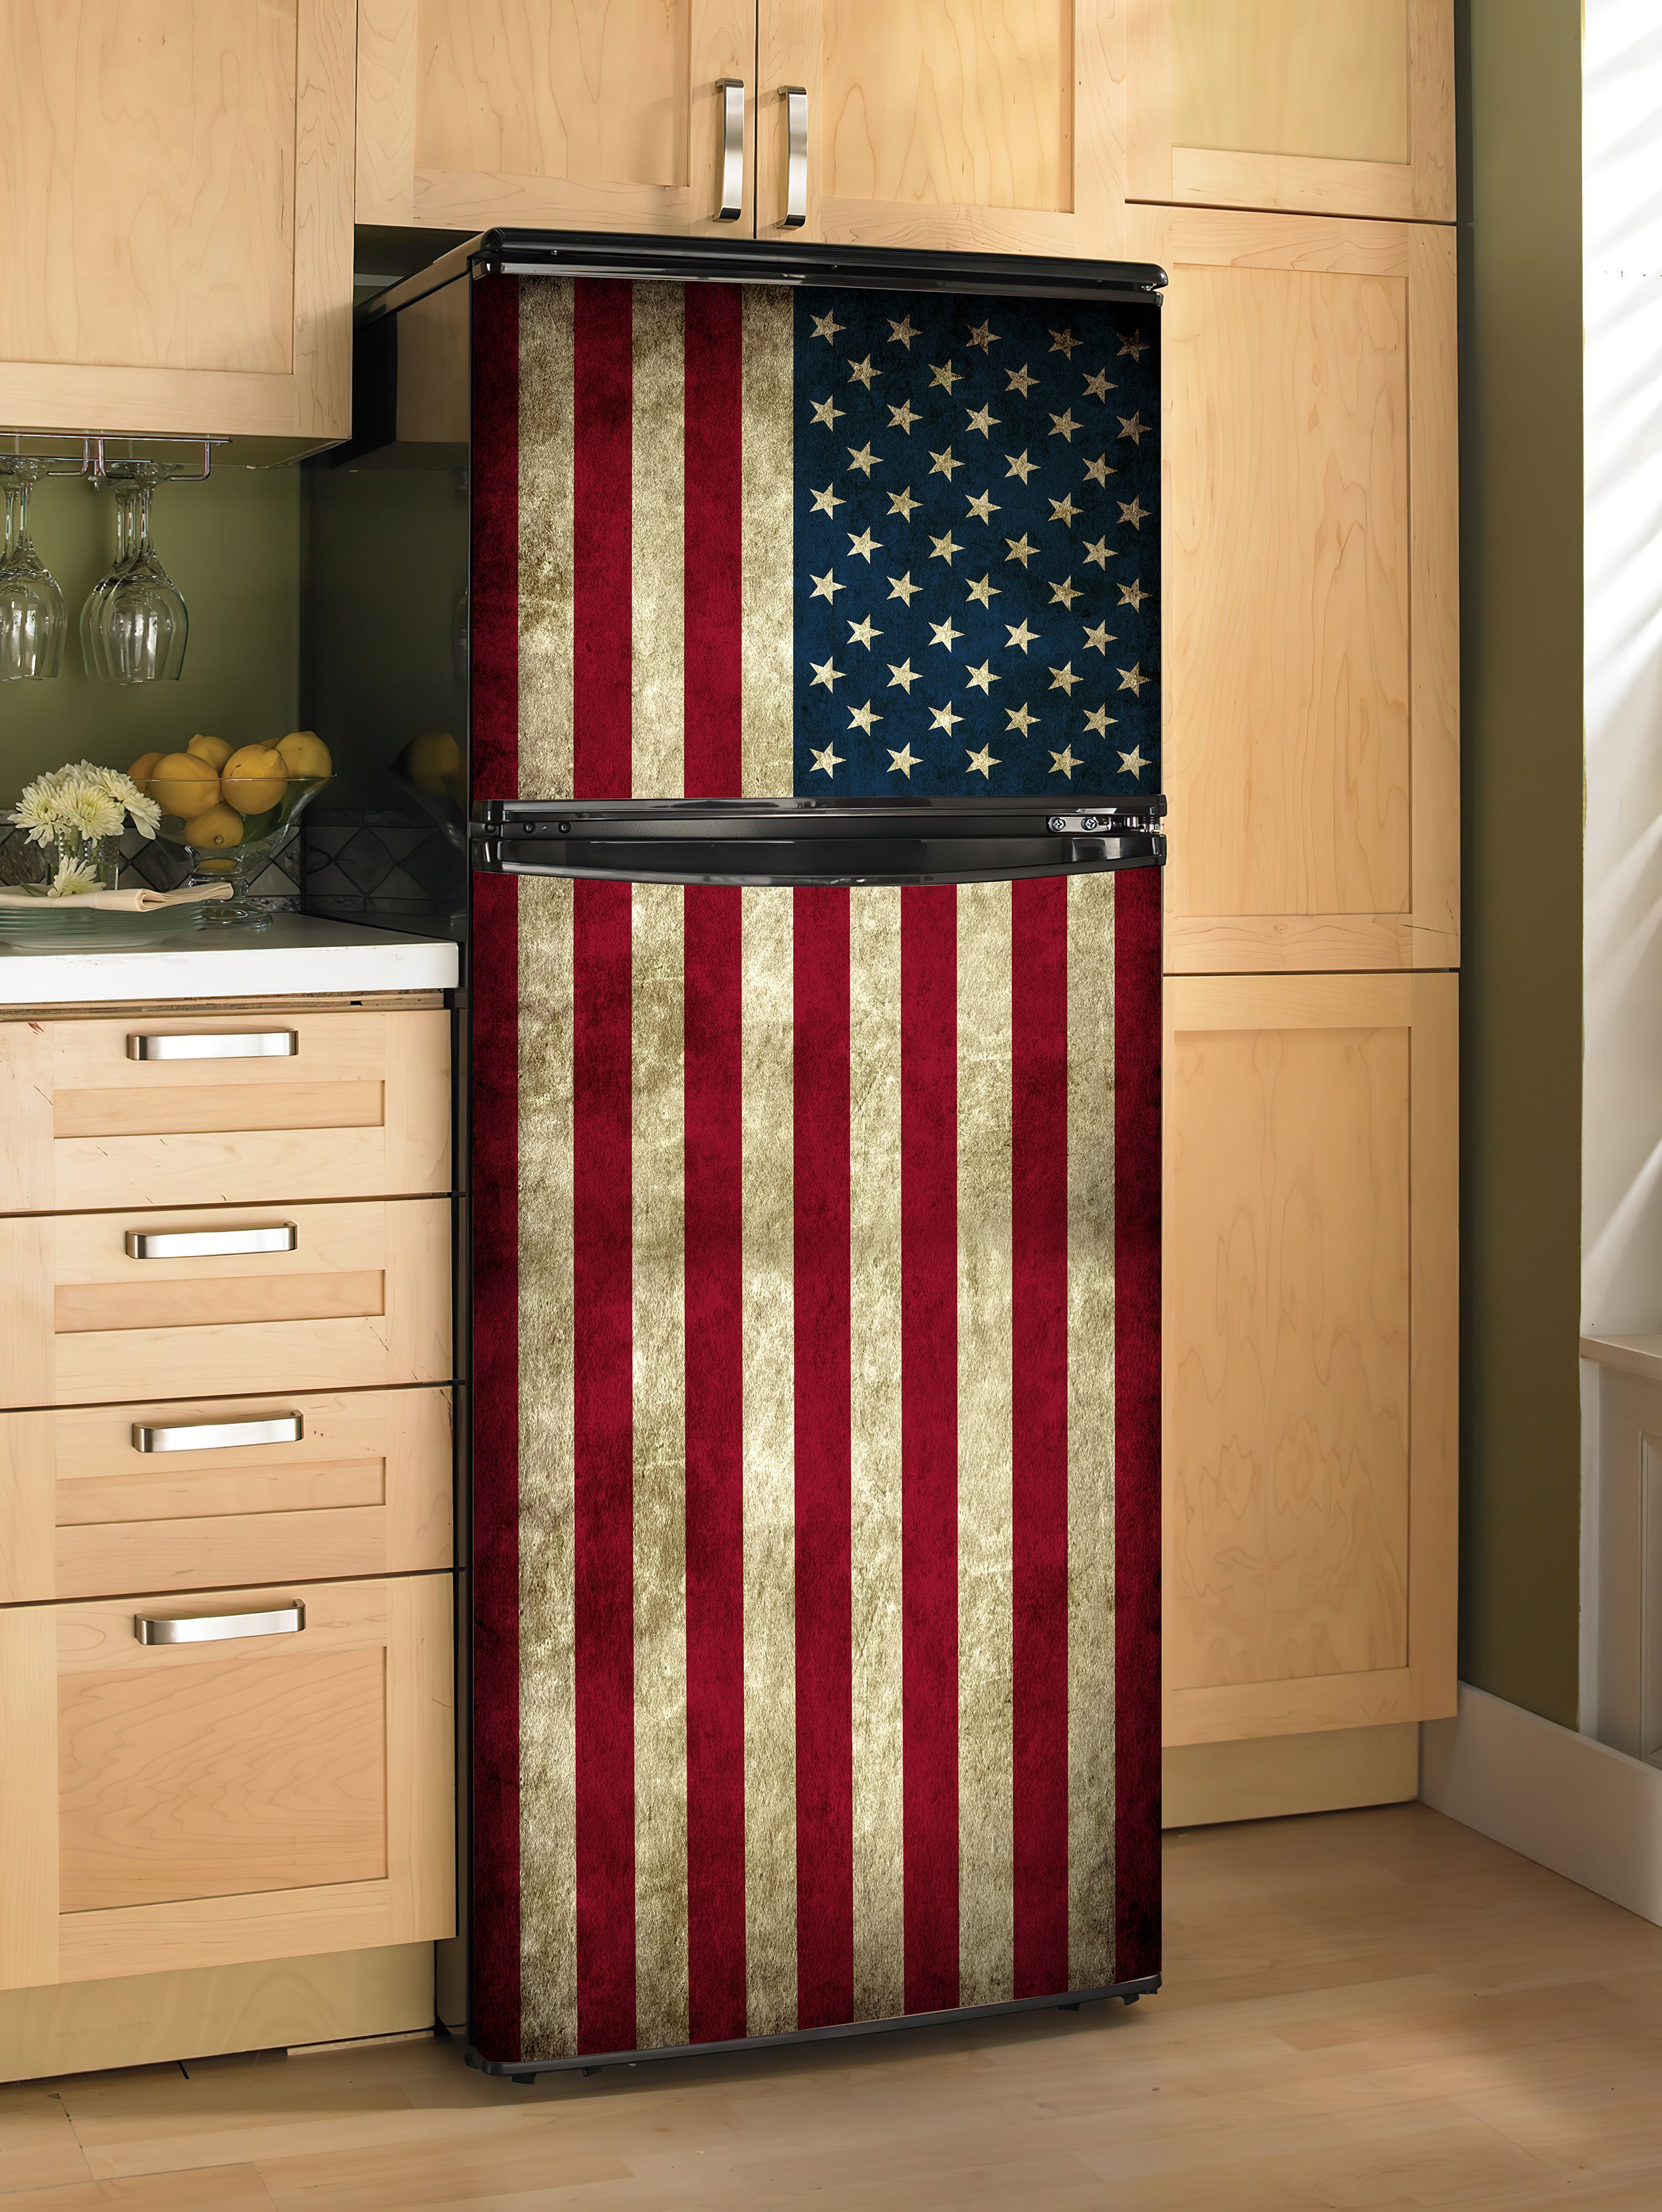 Refrigerator Wrap Vinyl | Retro US Flag Decal | Door Sticker |Ell